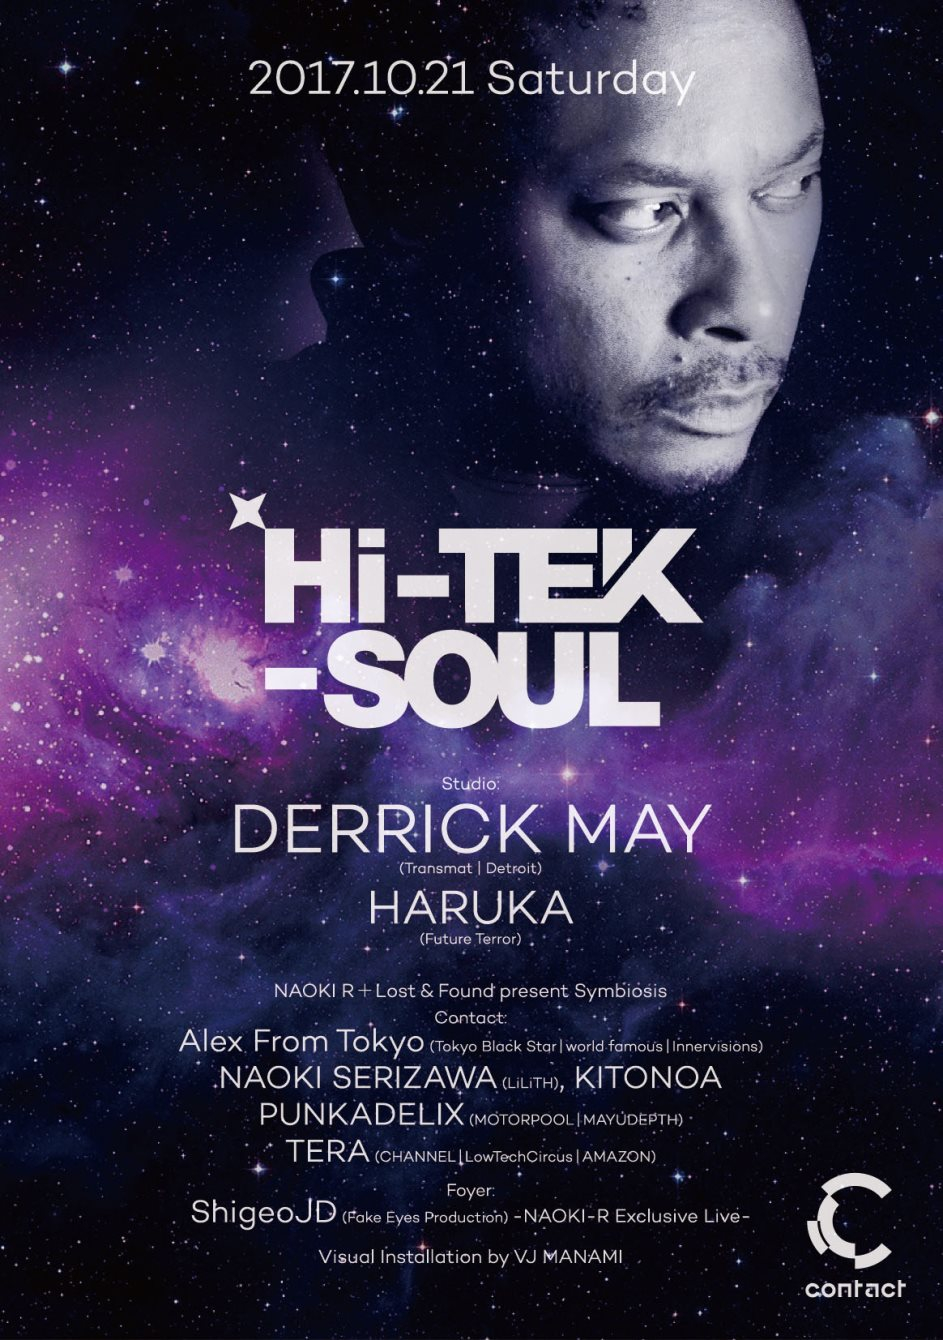 Derrick May Hi-TEK-Soul Japan Tour - Flyer front